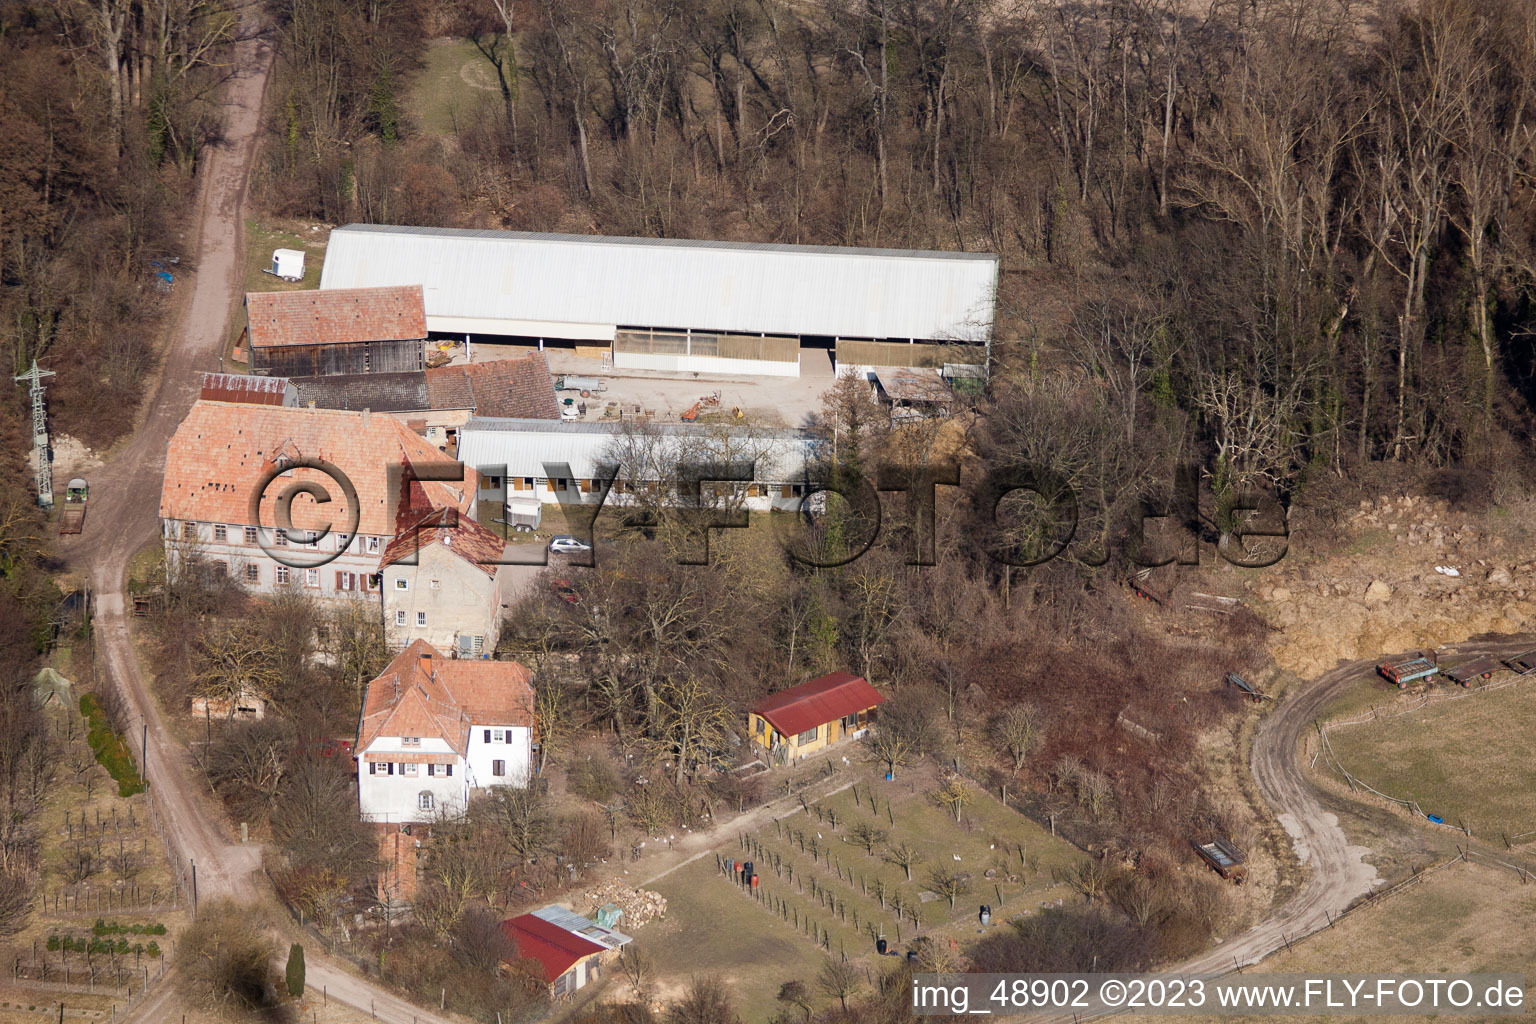 Wanzheim Mill in Rheinzabern in the state Rhineland-Palatinate, Germany viewn from the air